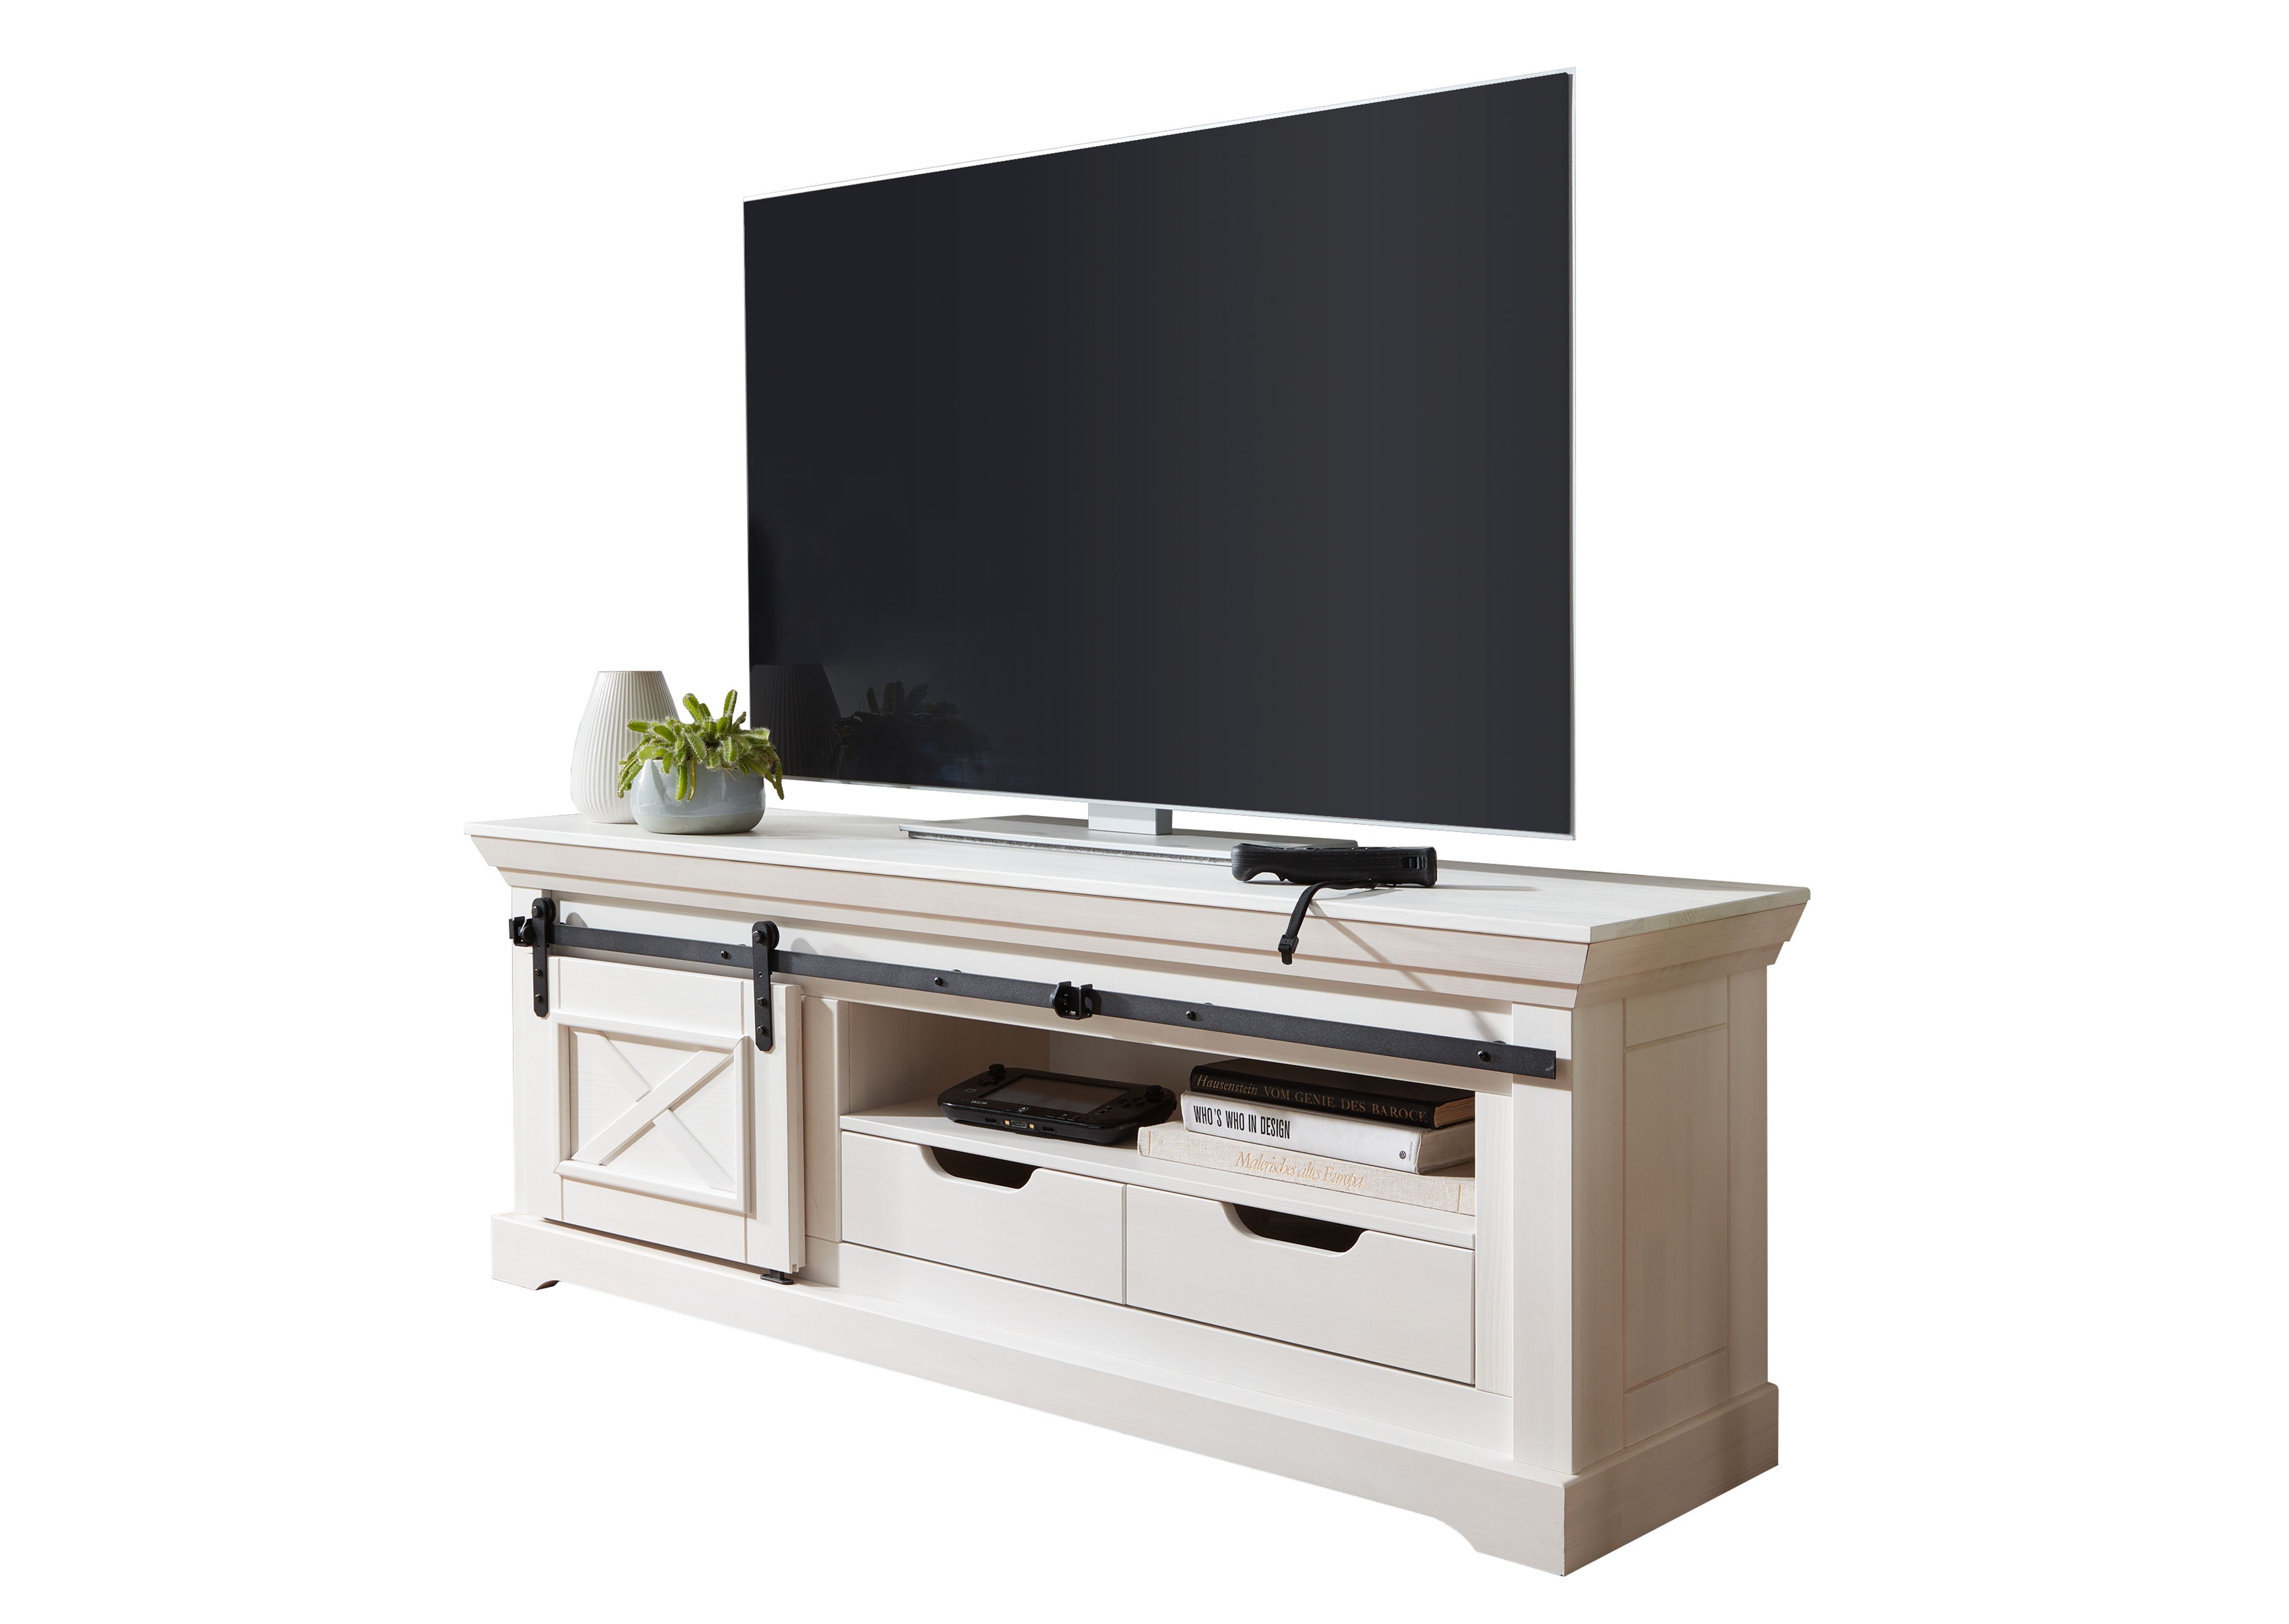 Woodroom TV-Schrank Maribo Kiefer massiv weiß, BxHxT 153x57x40 cm | TV-Schränke